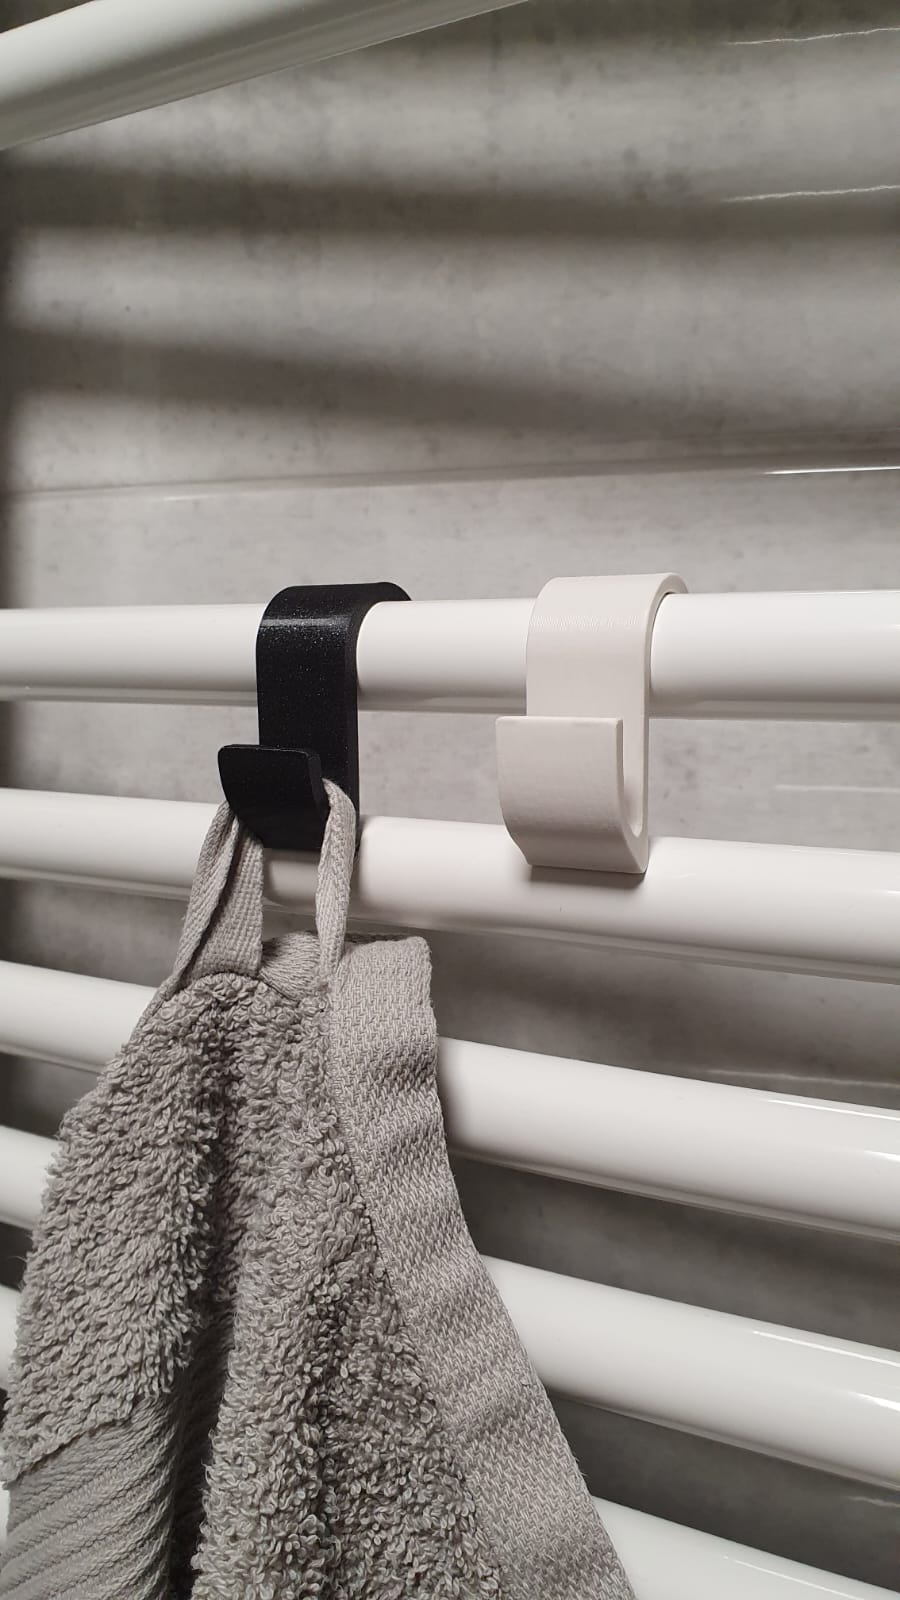 Towel hook for radiator